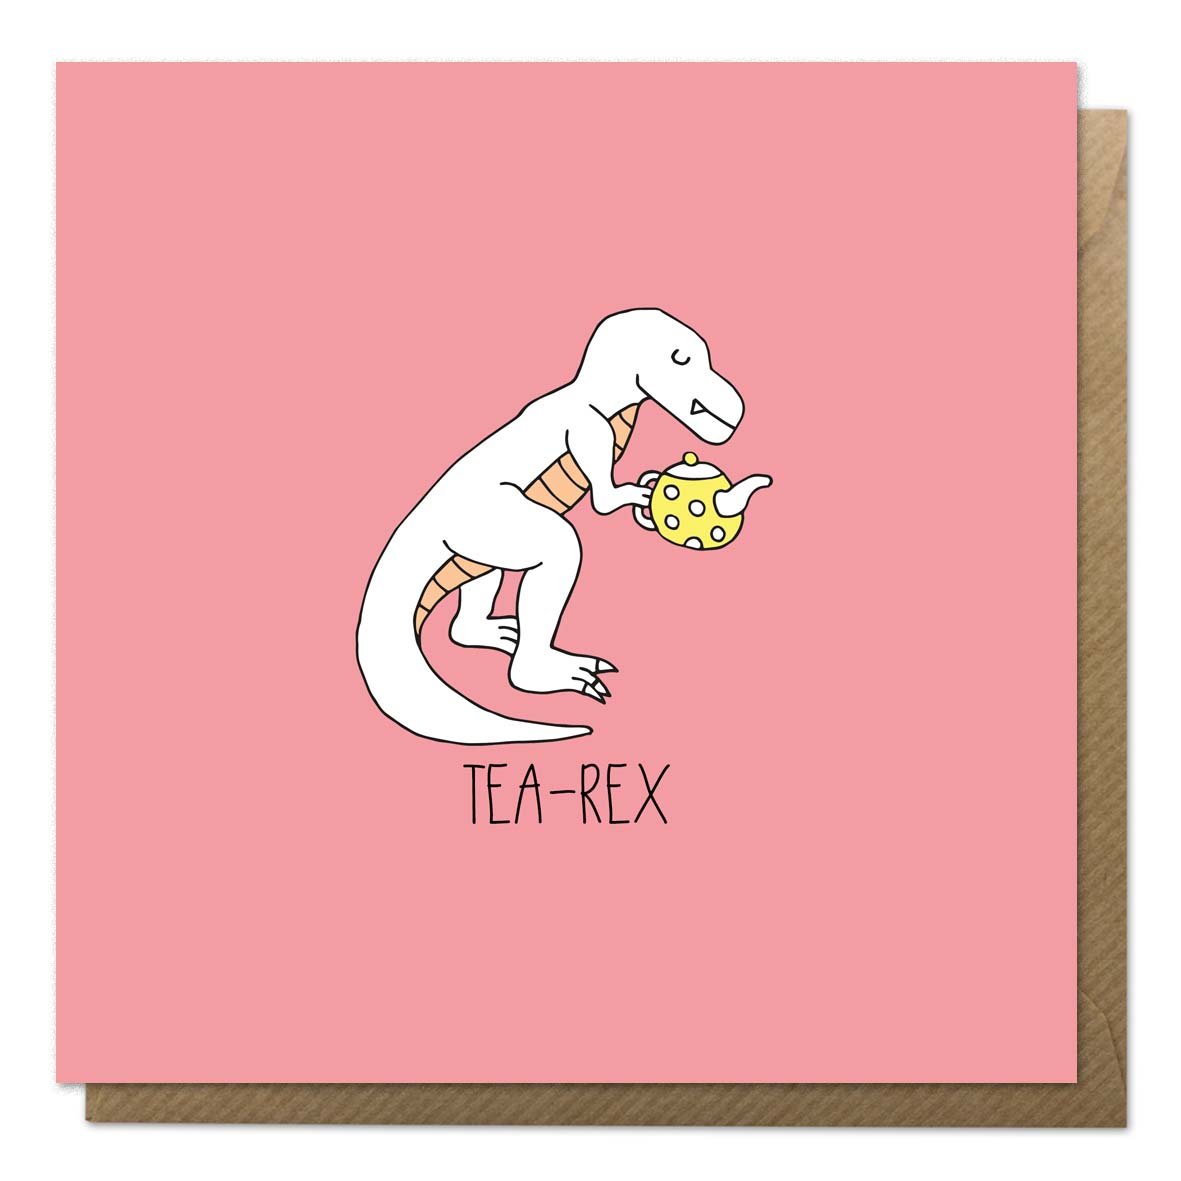 Pink greeting card with an illustration of tea-rex with a tea pot